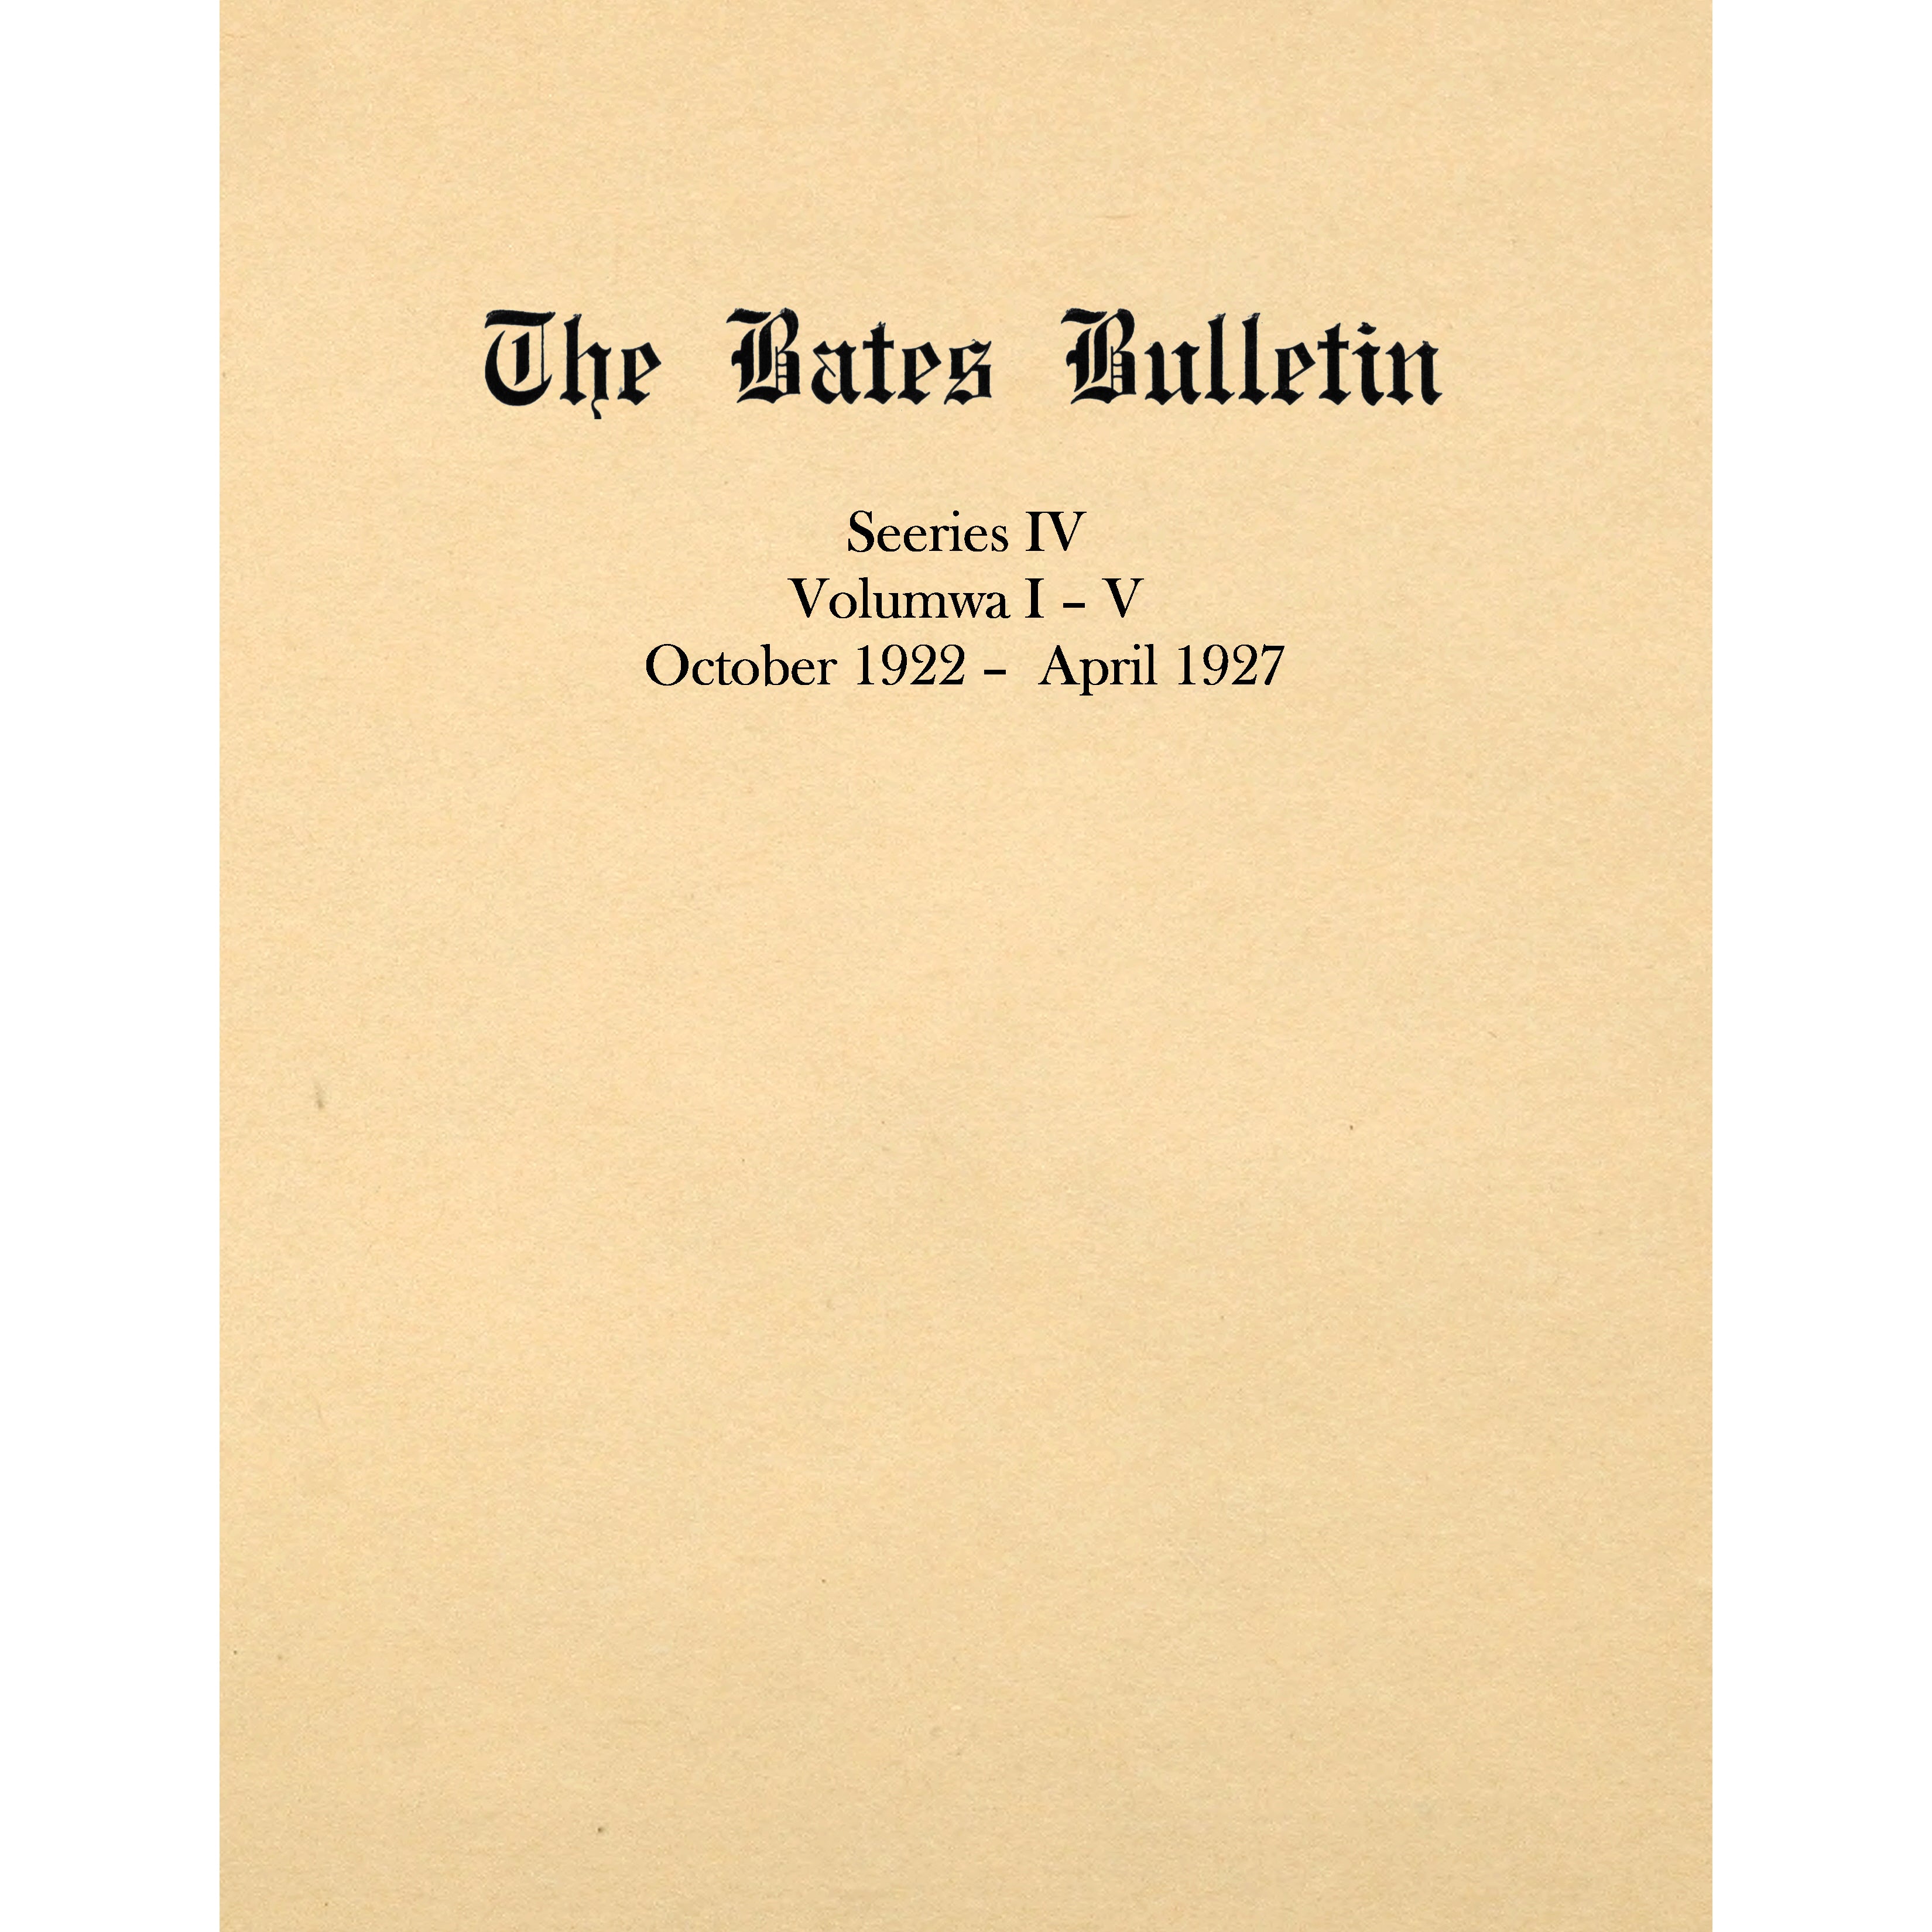 The Bates Bulletin, Series IV 1922 -- 1927